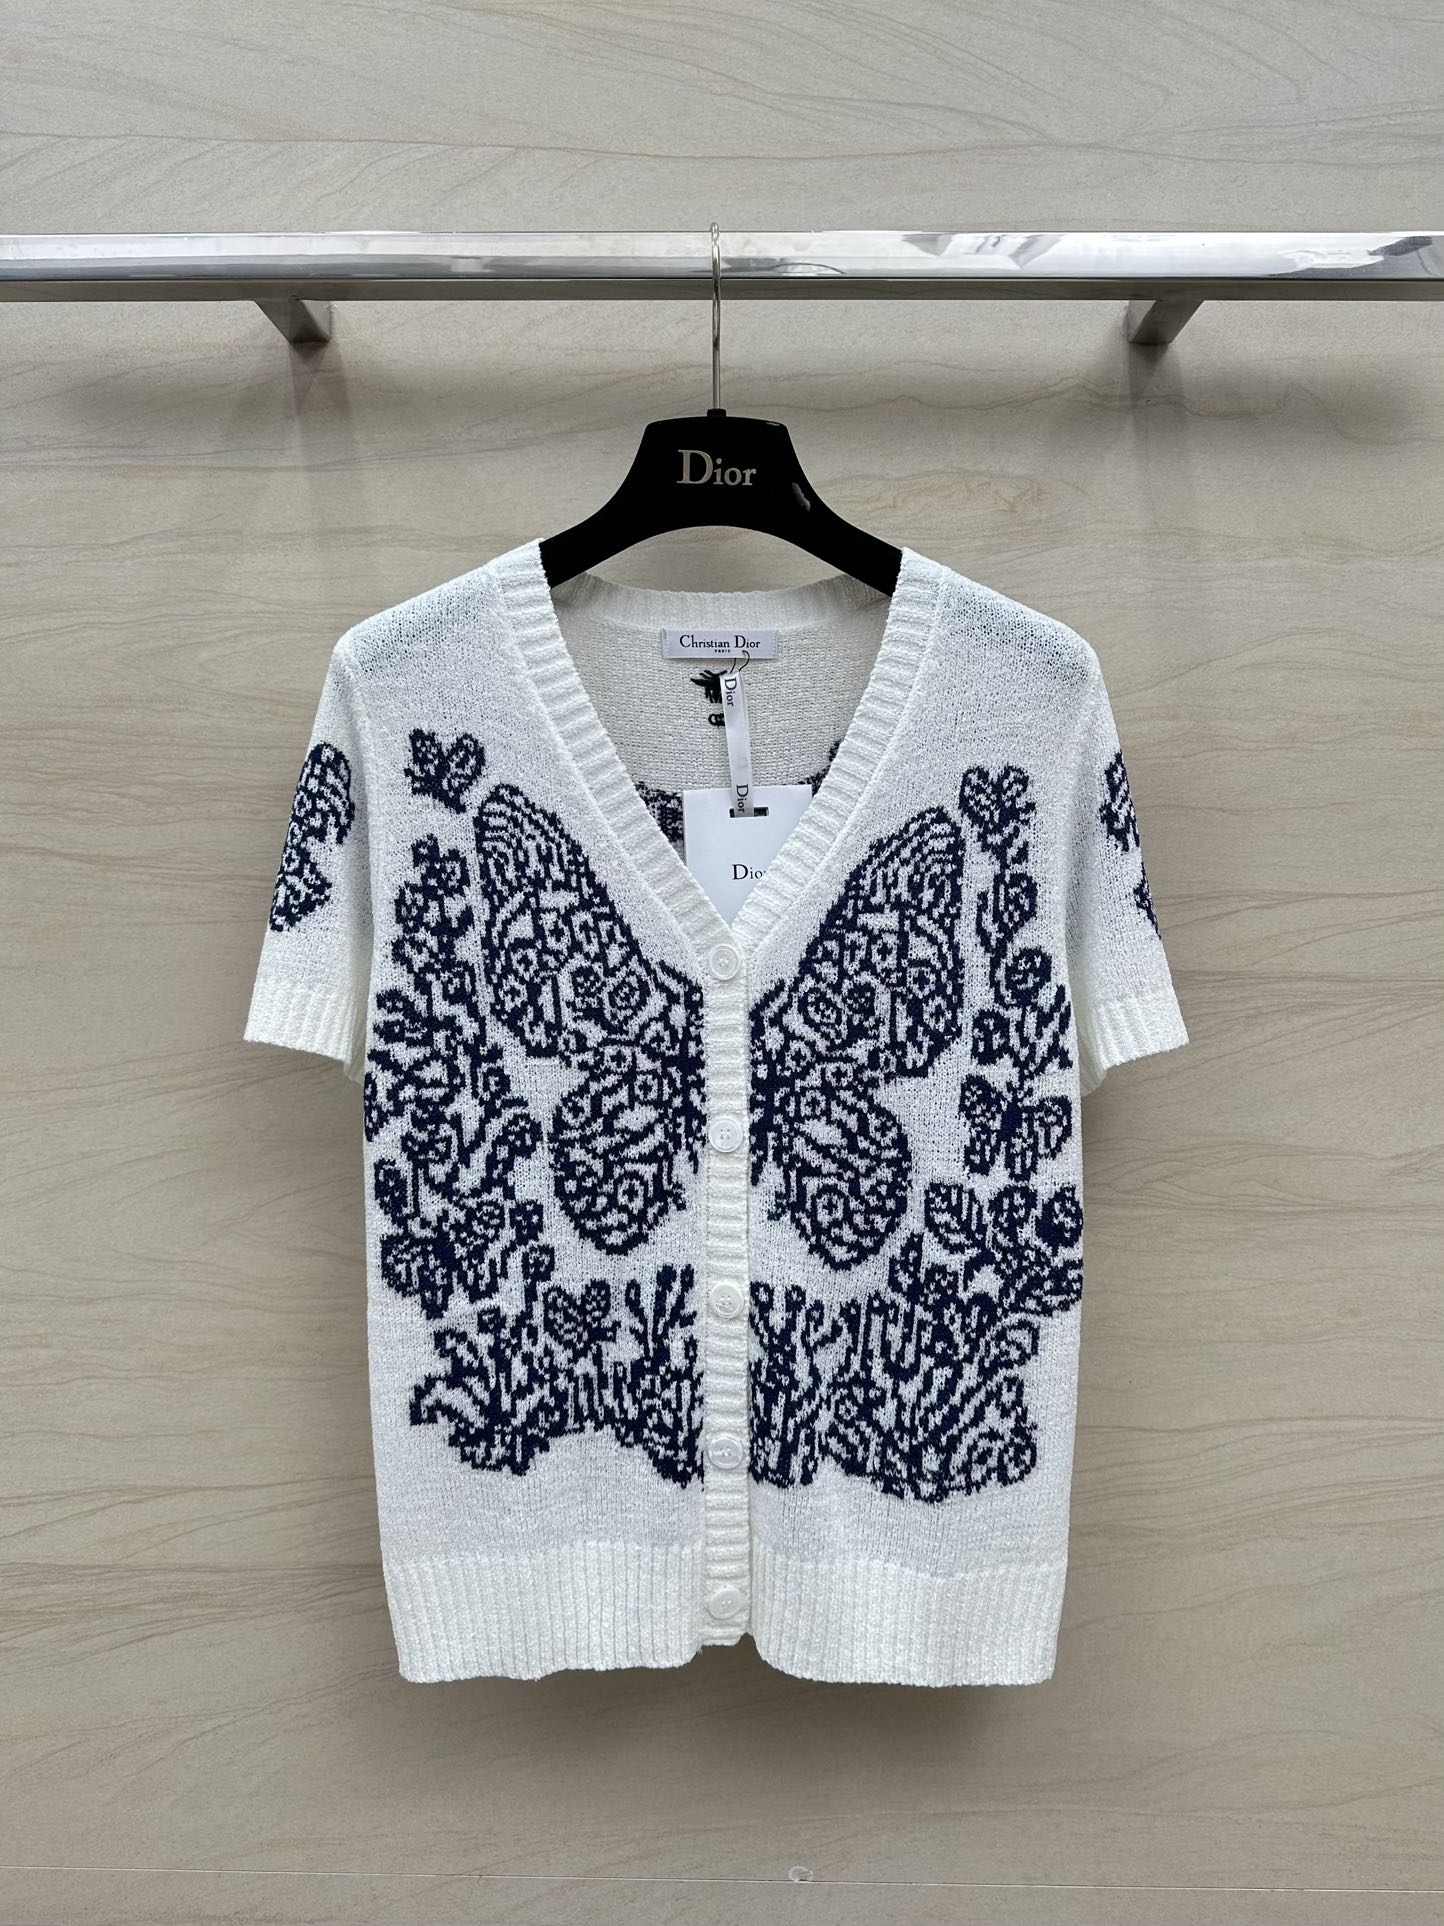 Dior Kleidung Hemden & Blusen Weiß Stickerei Kaschmir Stricken Weben Frühlingskollektion